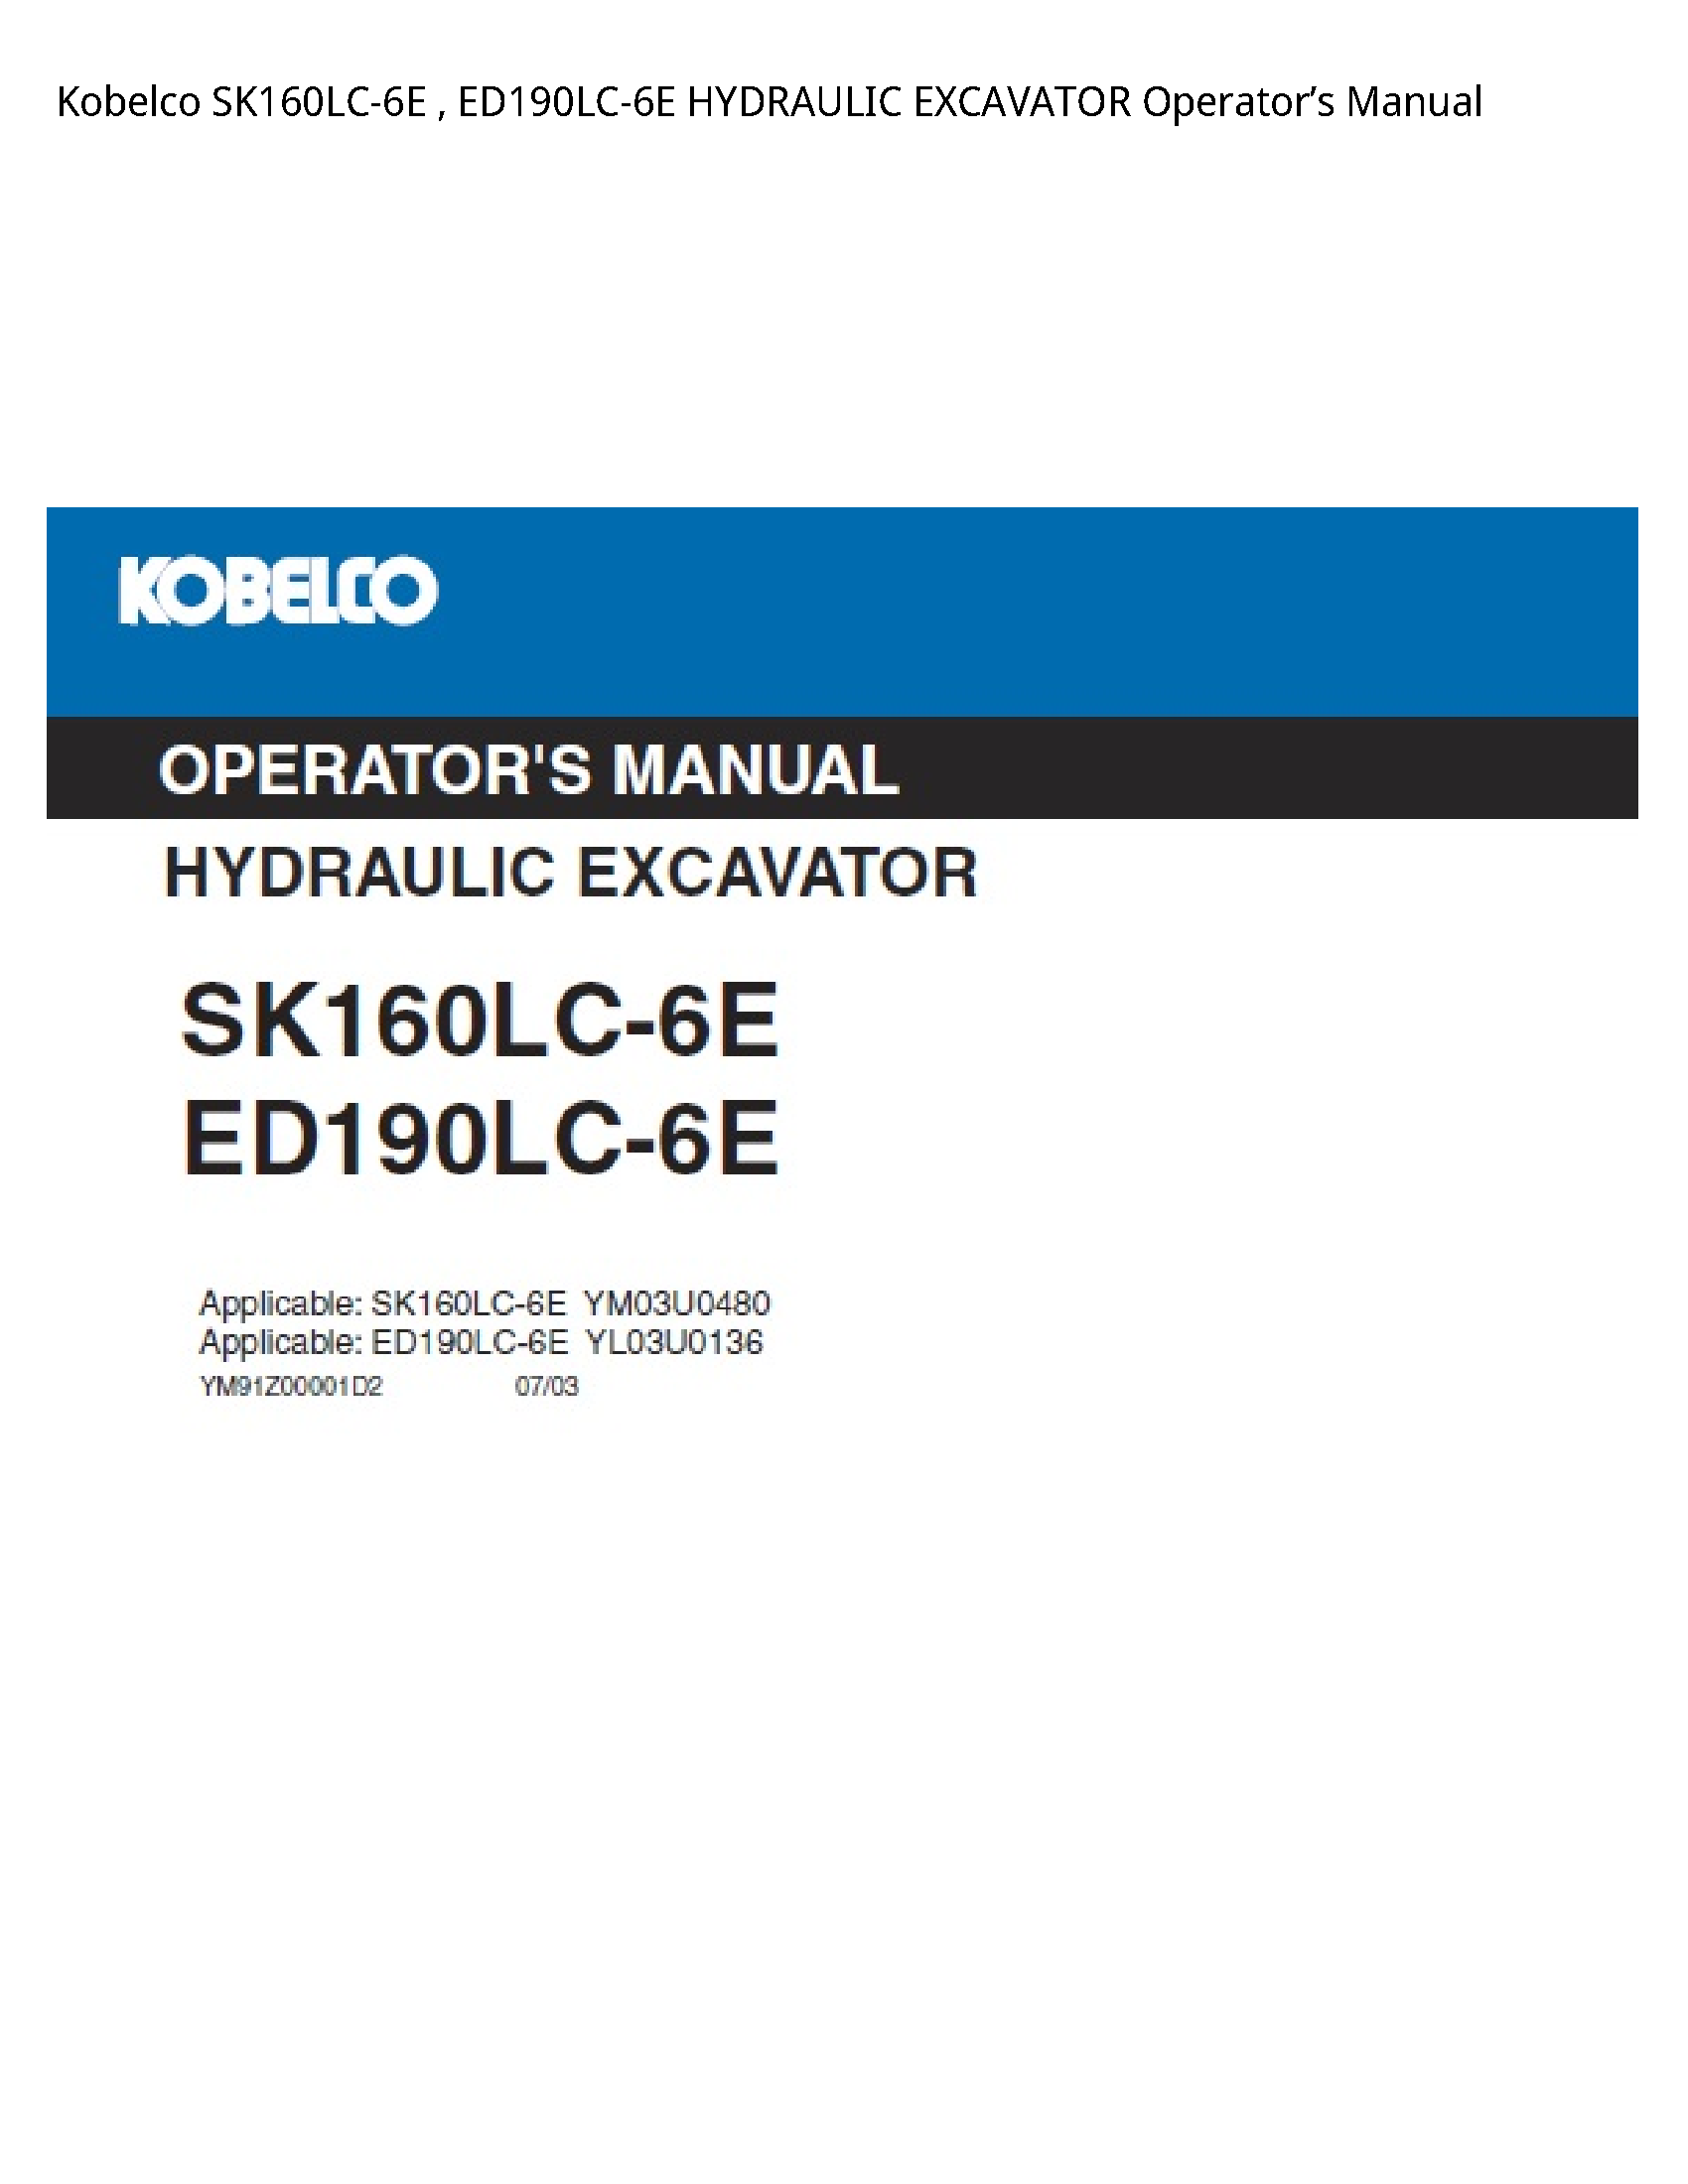 Kobelco SK160LC-6E HYDRAULIC EXCAVATOR Operator’s manual